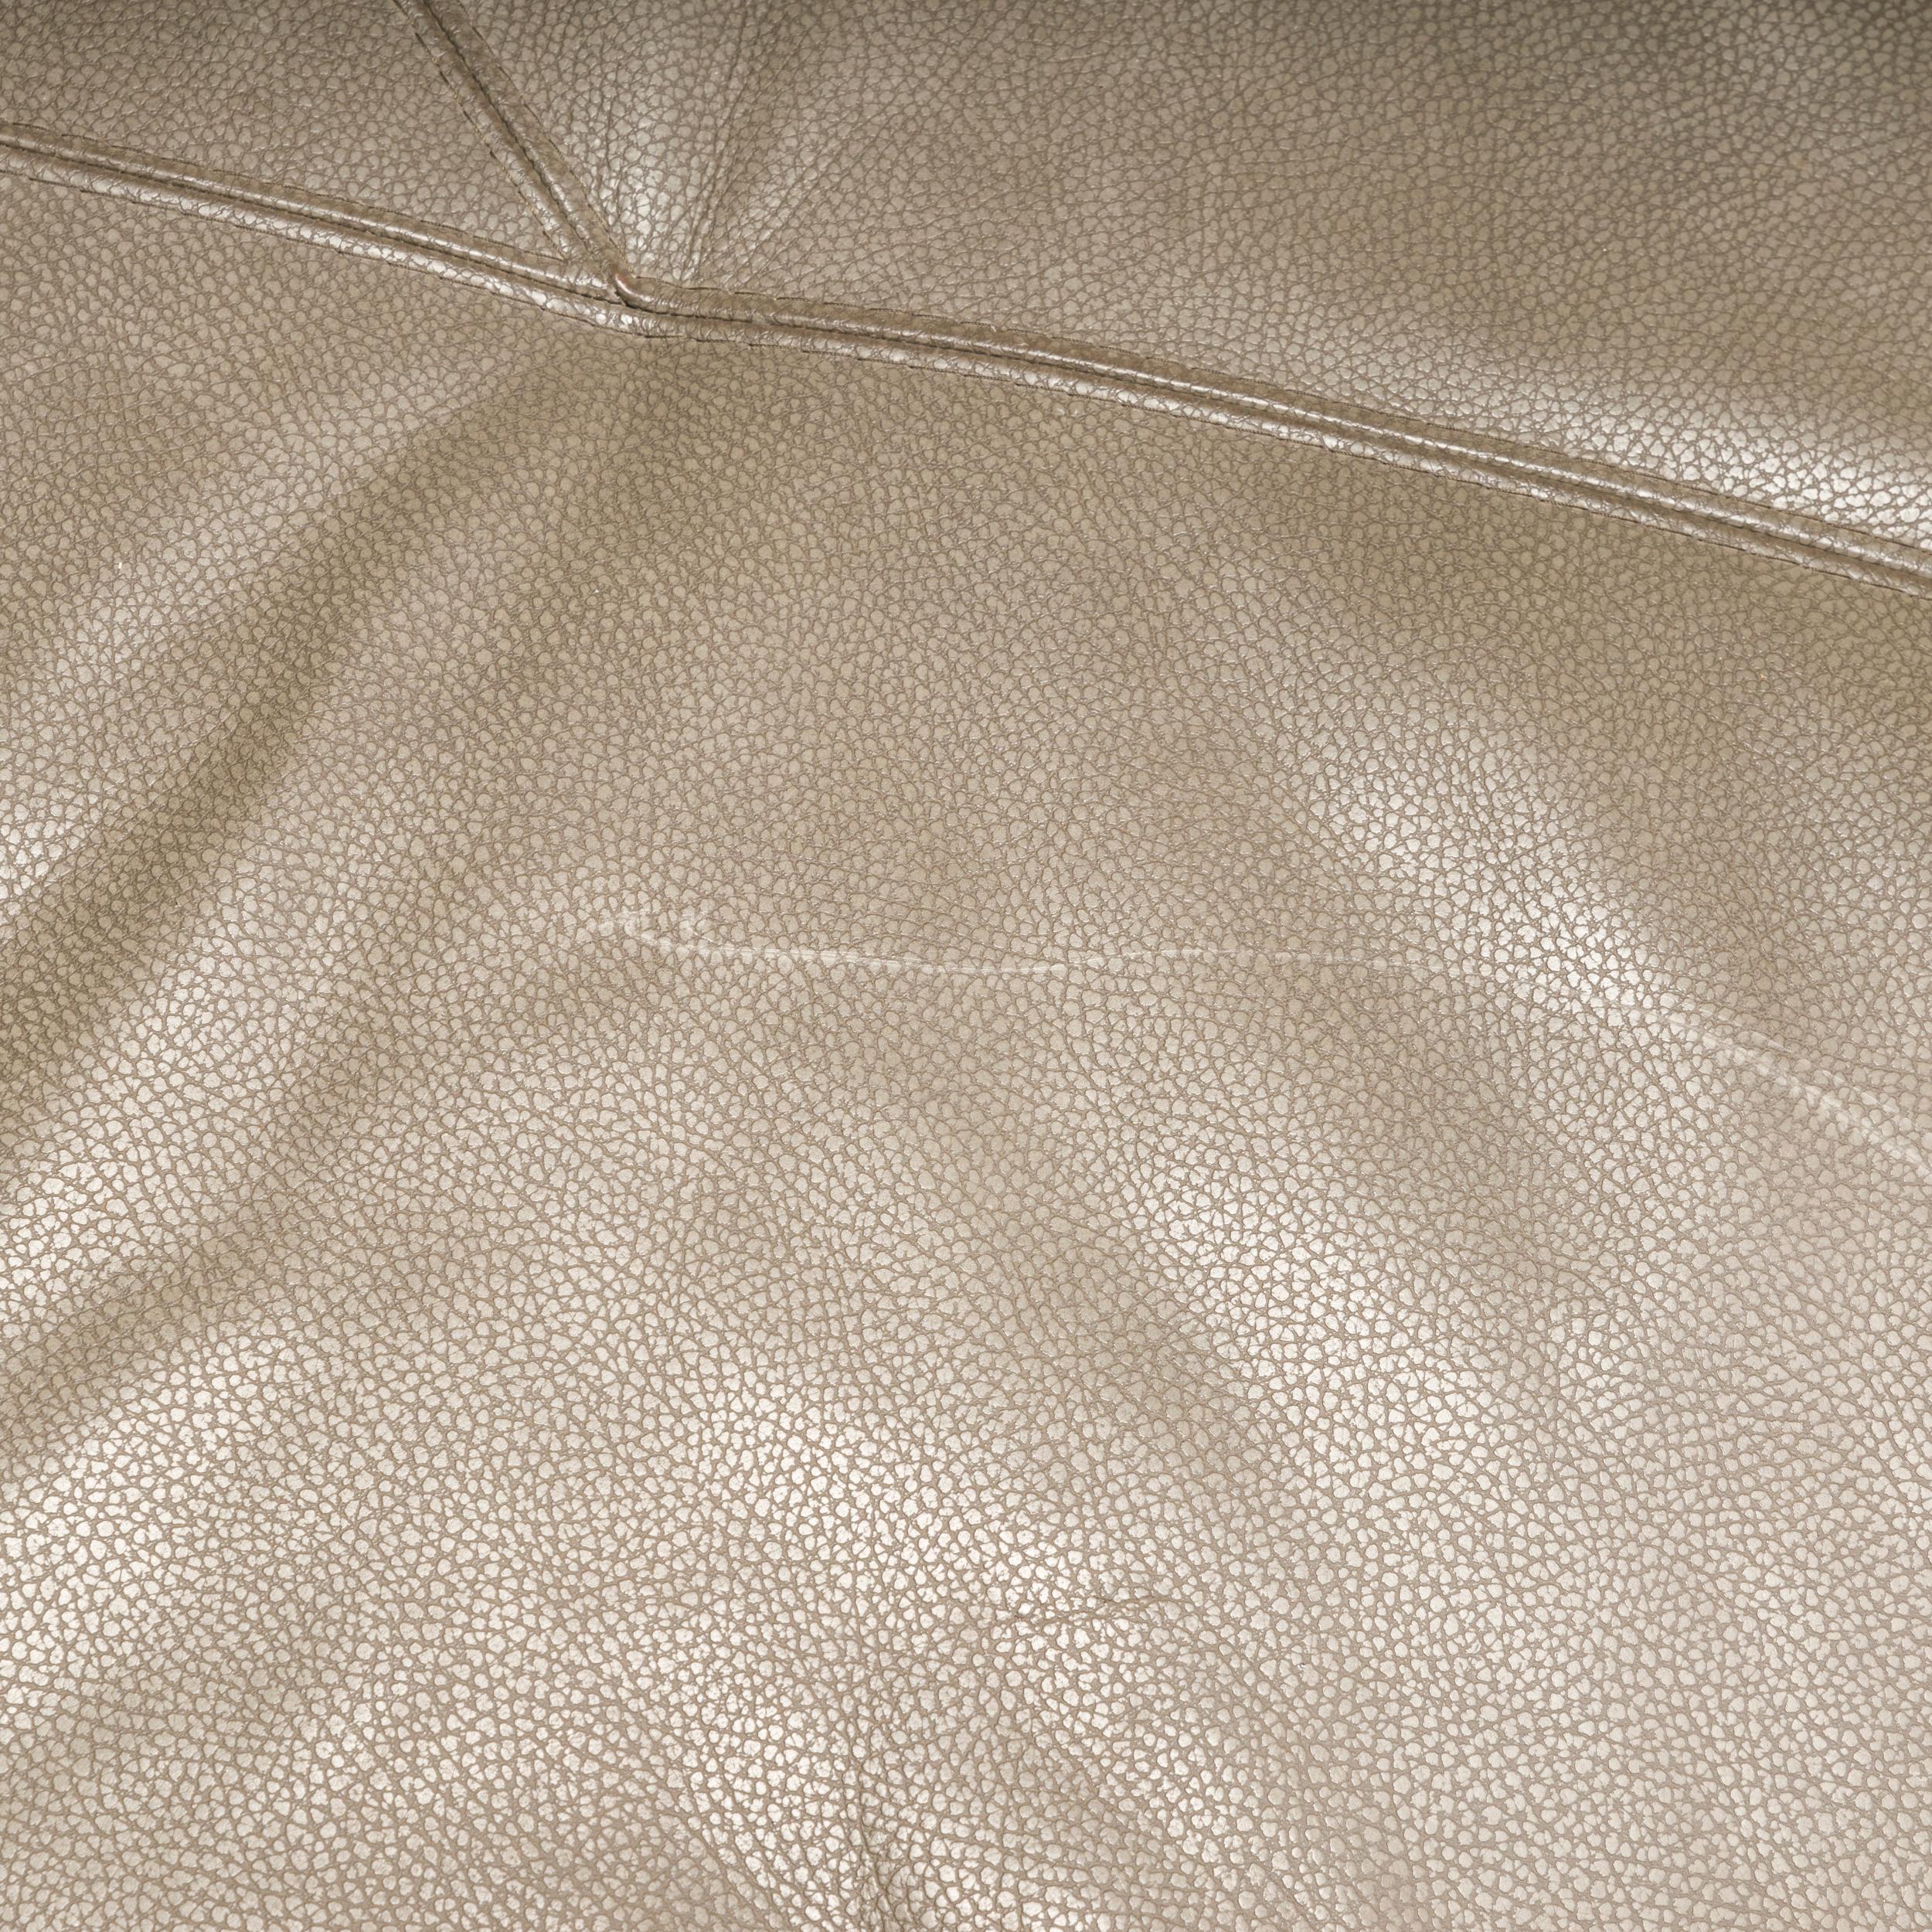 Roche Bobois by Gabriele Assmann & Alfred Kleene Leather Digital Curved Sofa For Sale 3